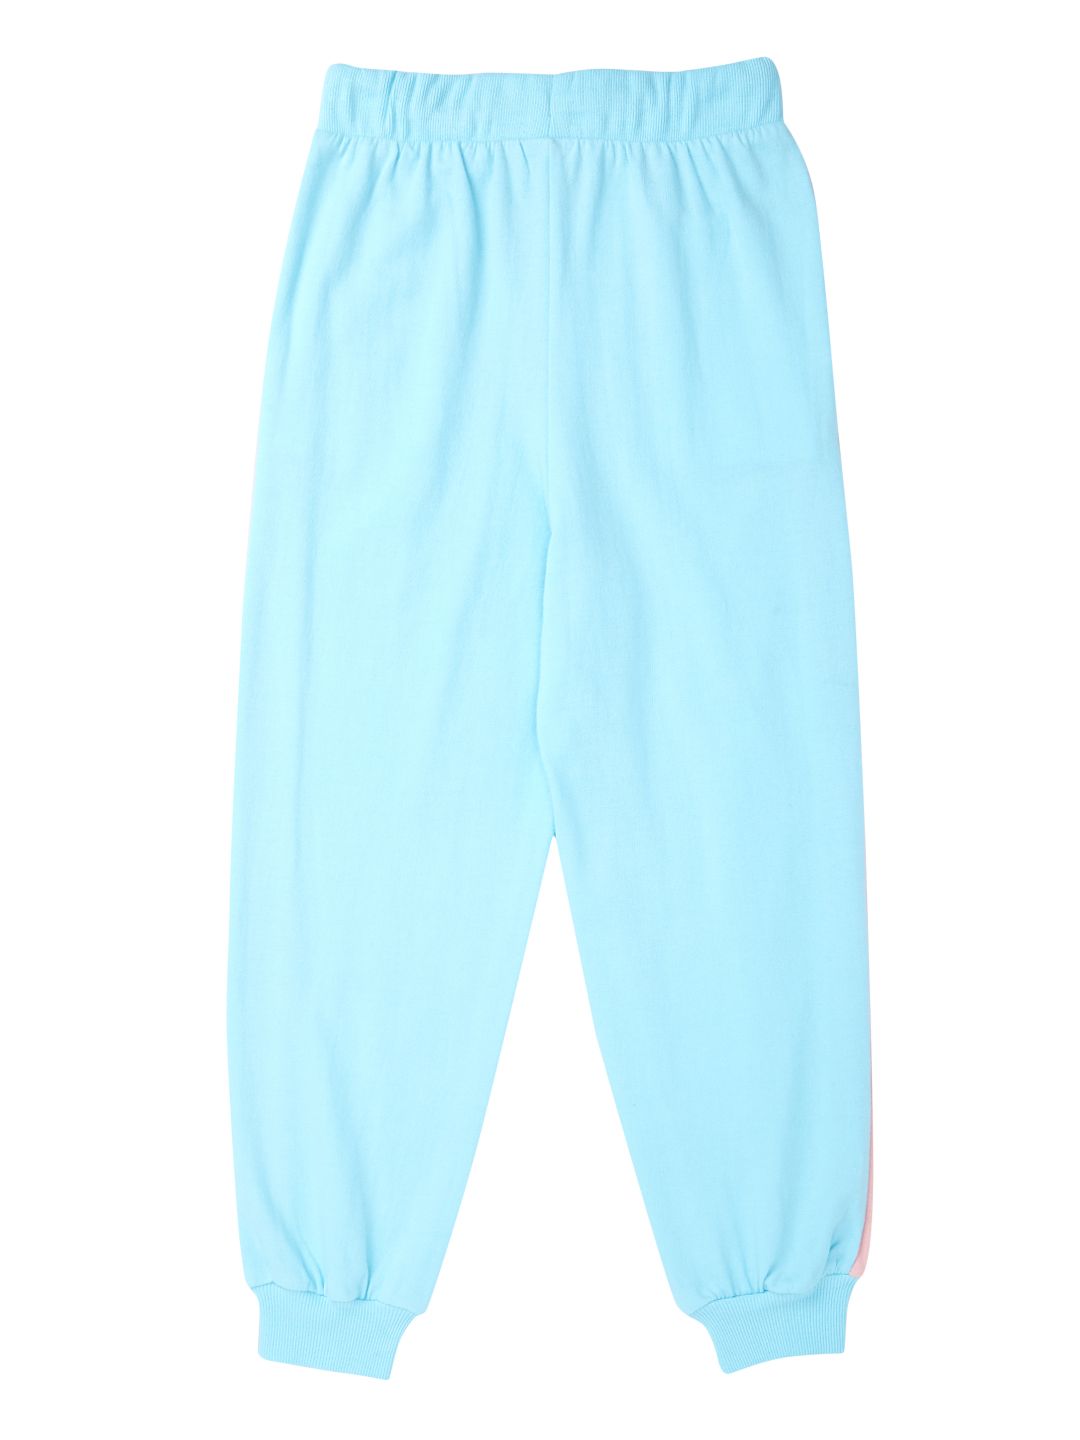 Premium Side Stripe Zip Pocket Track Pants (Light Blue - White) – Zamage